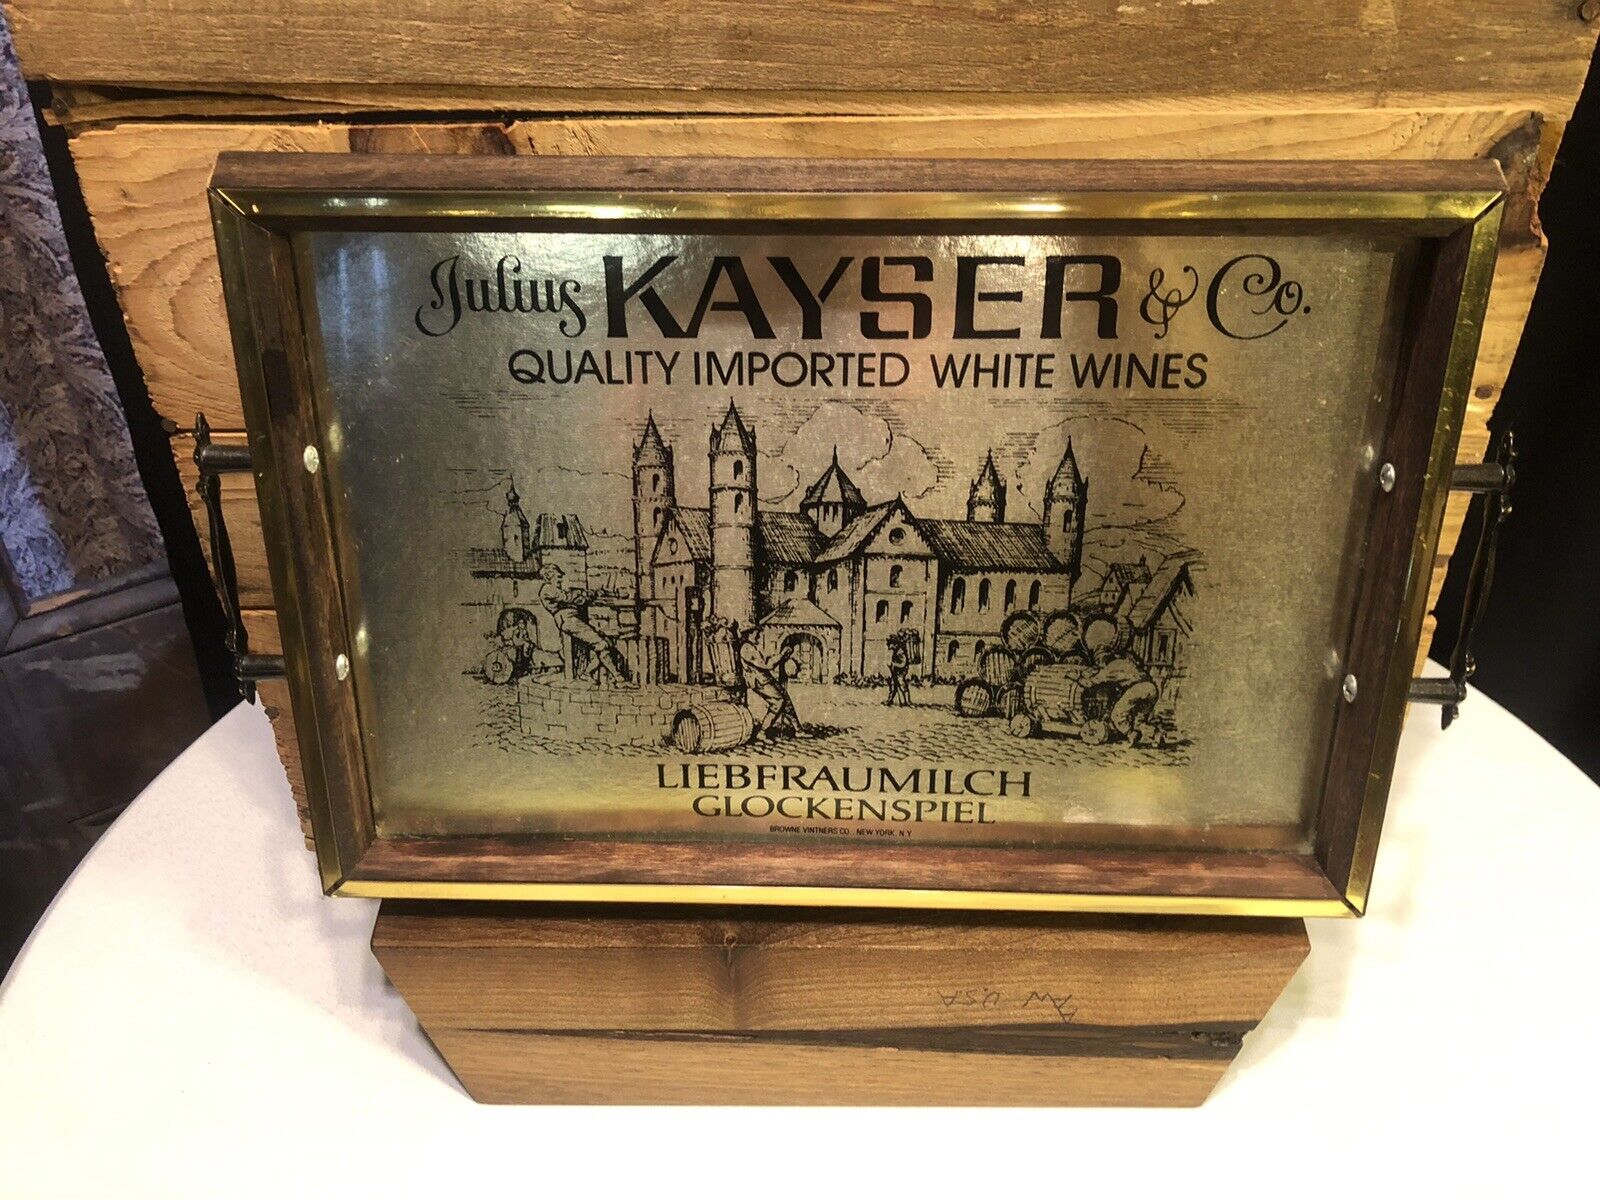 Vintage Julius Kayser & Co. Wine Bar Tavern Tray or Wall Art Hanging, Bar Decor